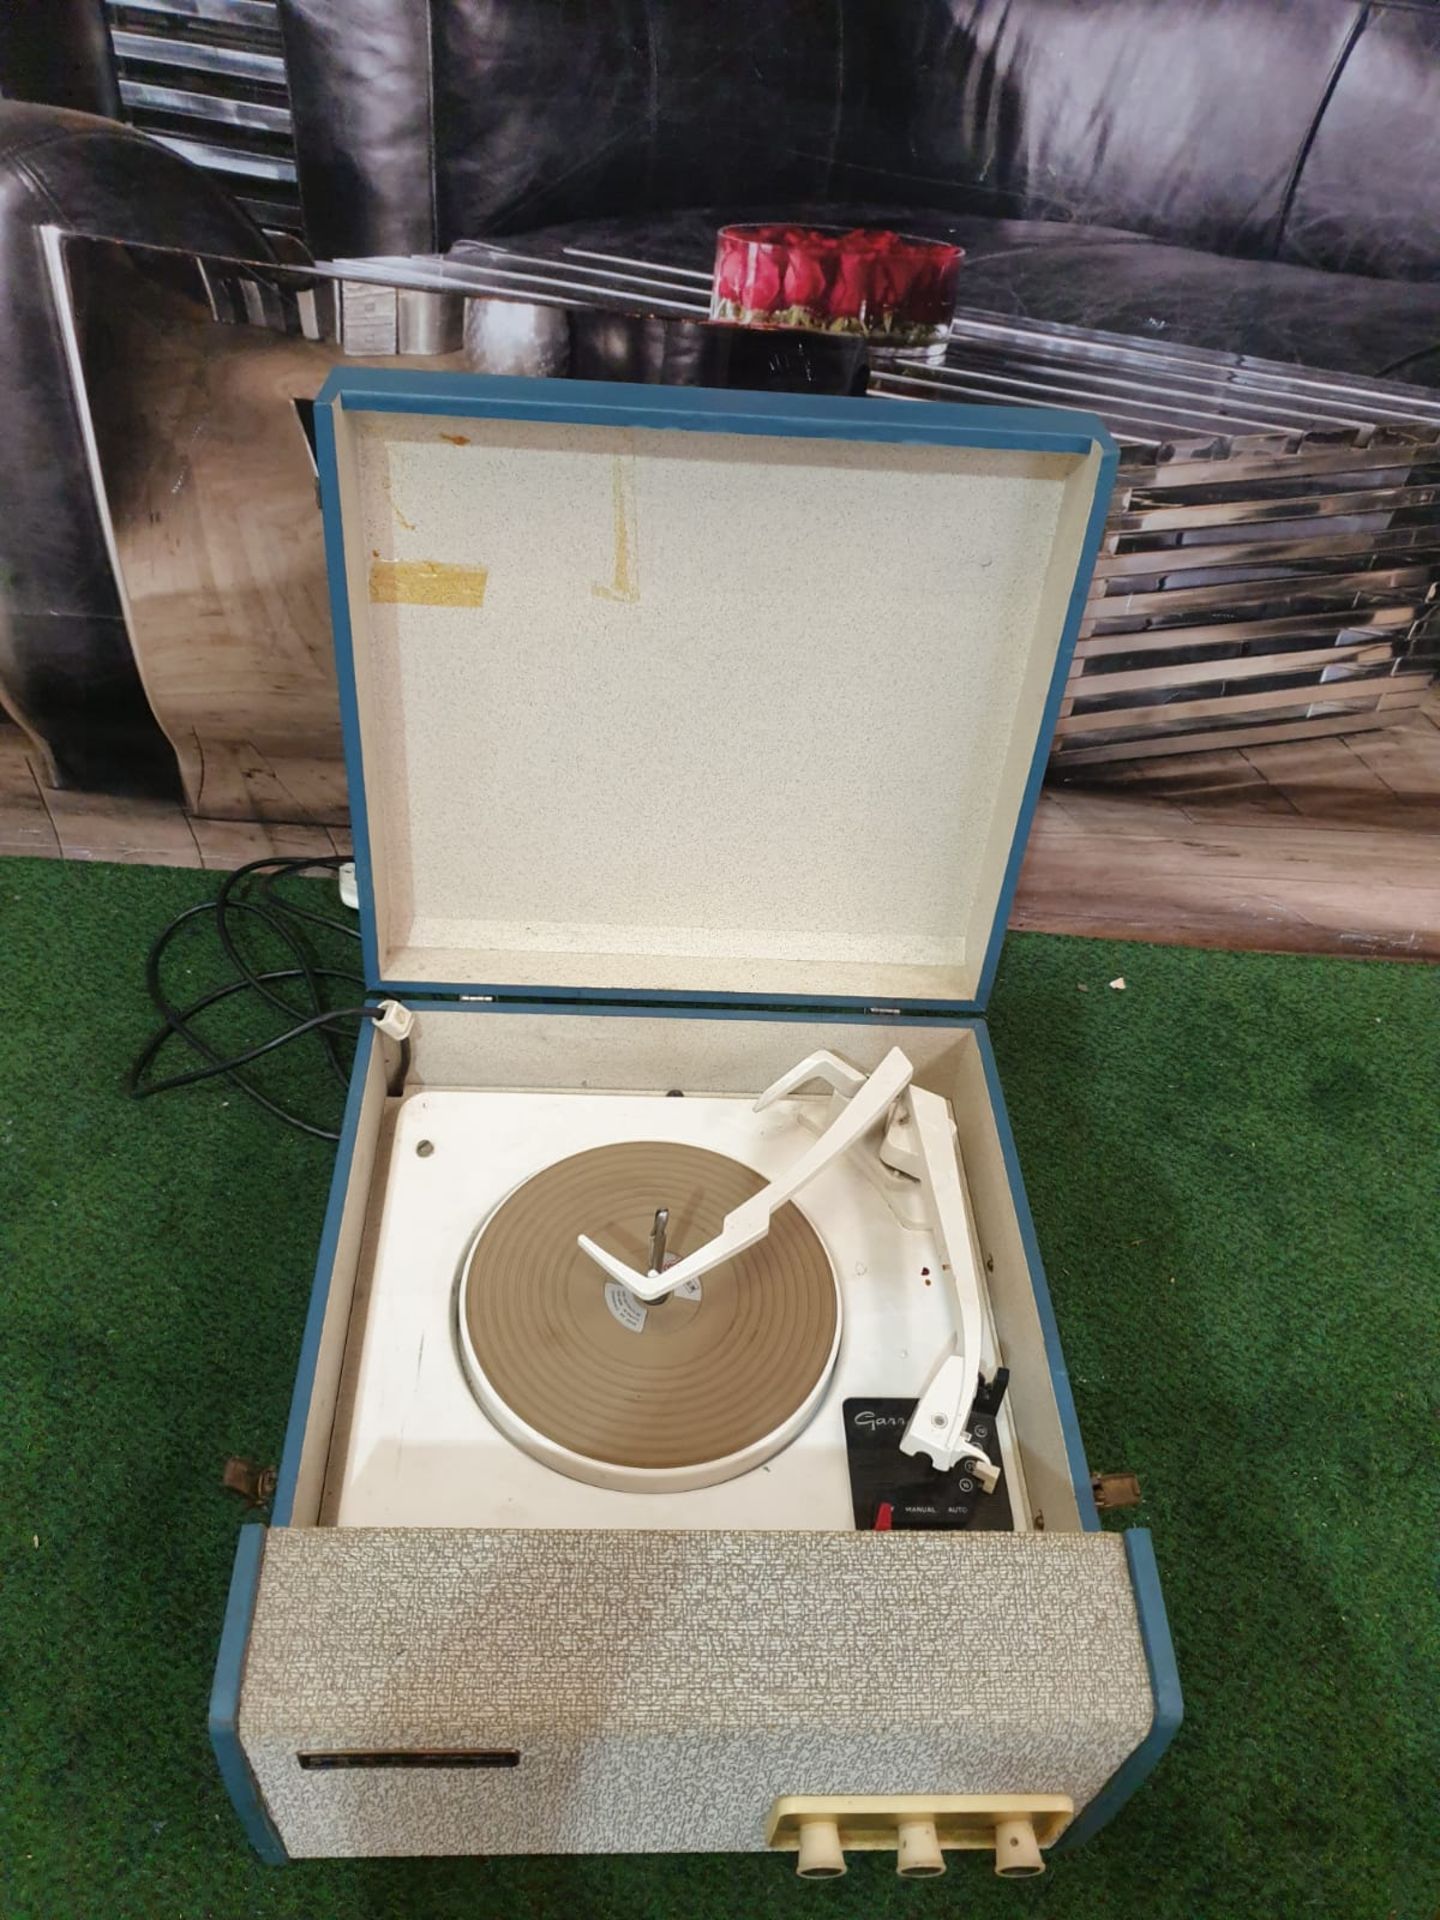 Travel record Player Blue Case Made By Ferranti Circa 1958 Ferranti or Ferranti International plc - Image 2 of 3